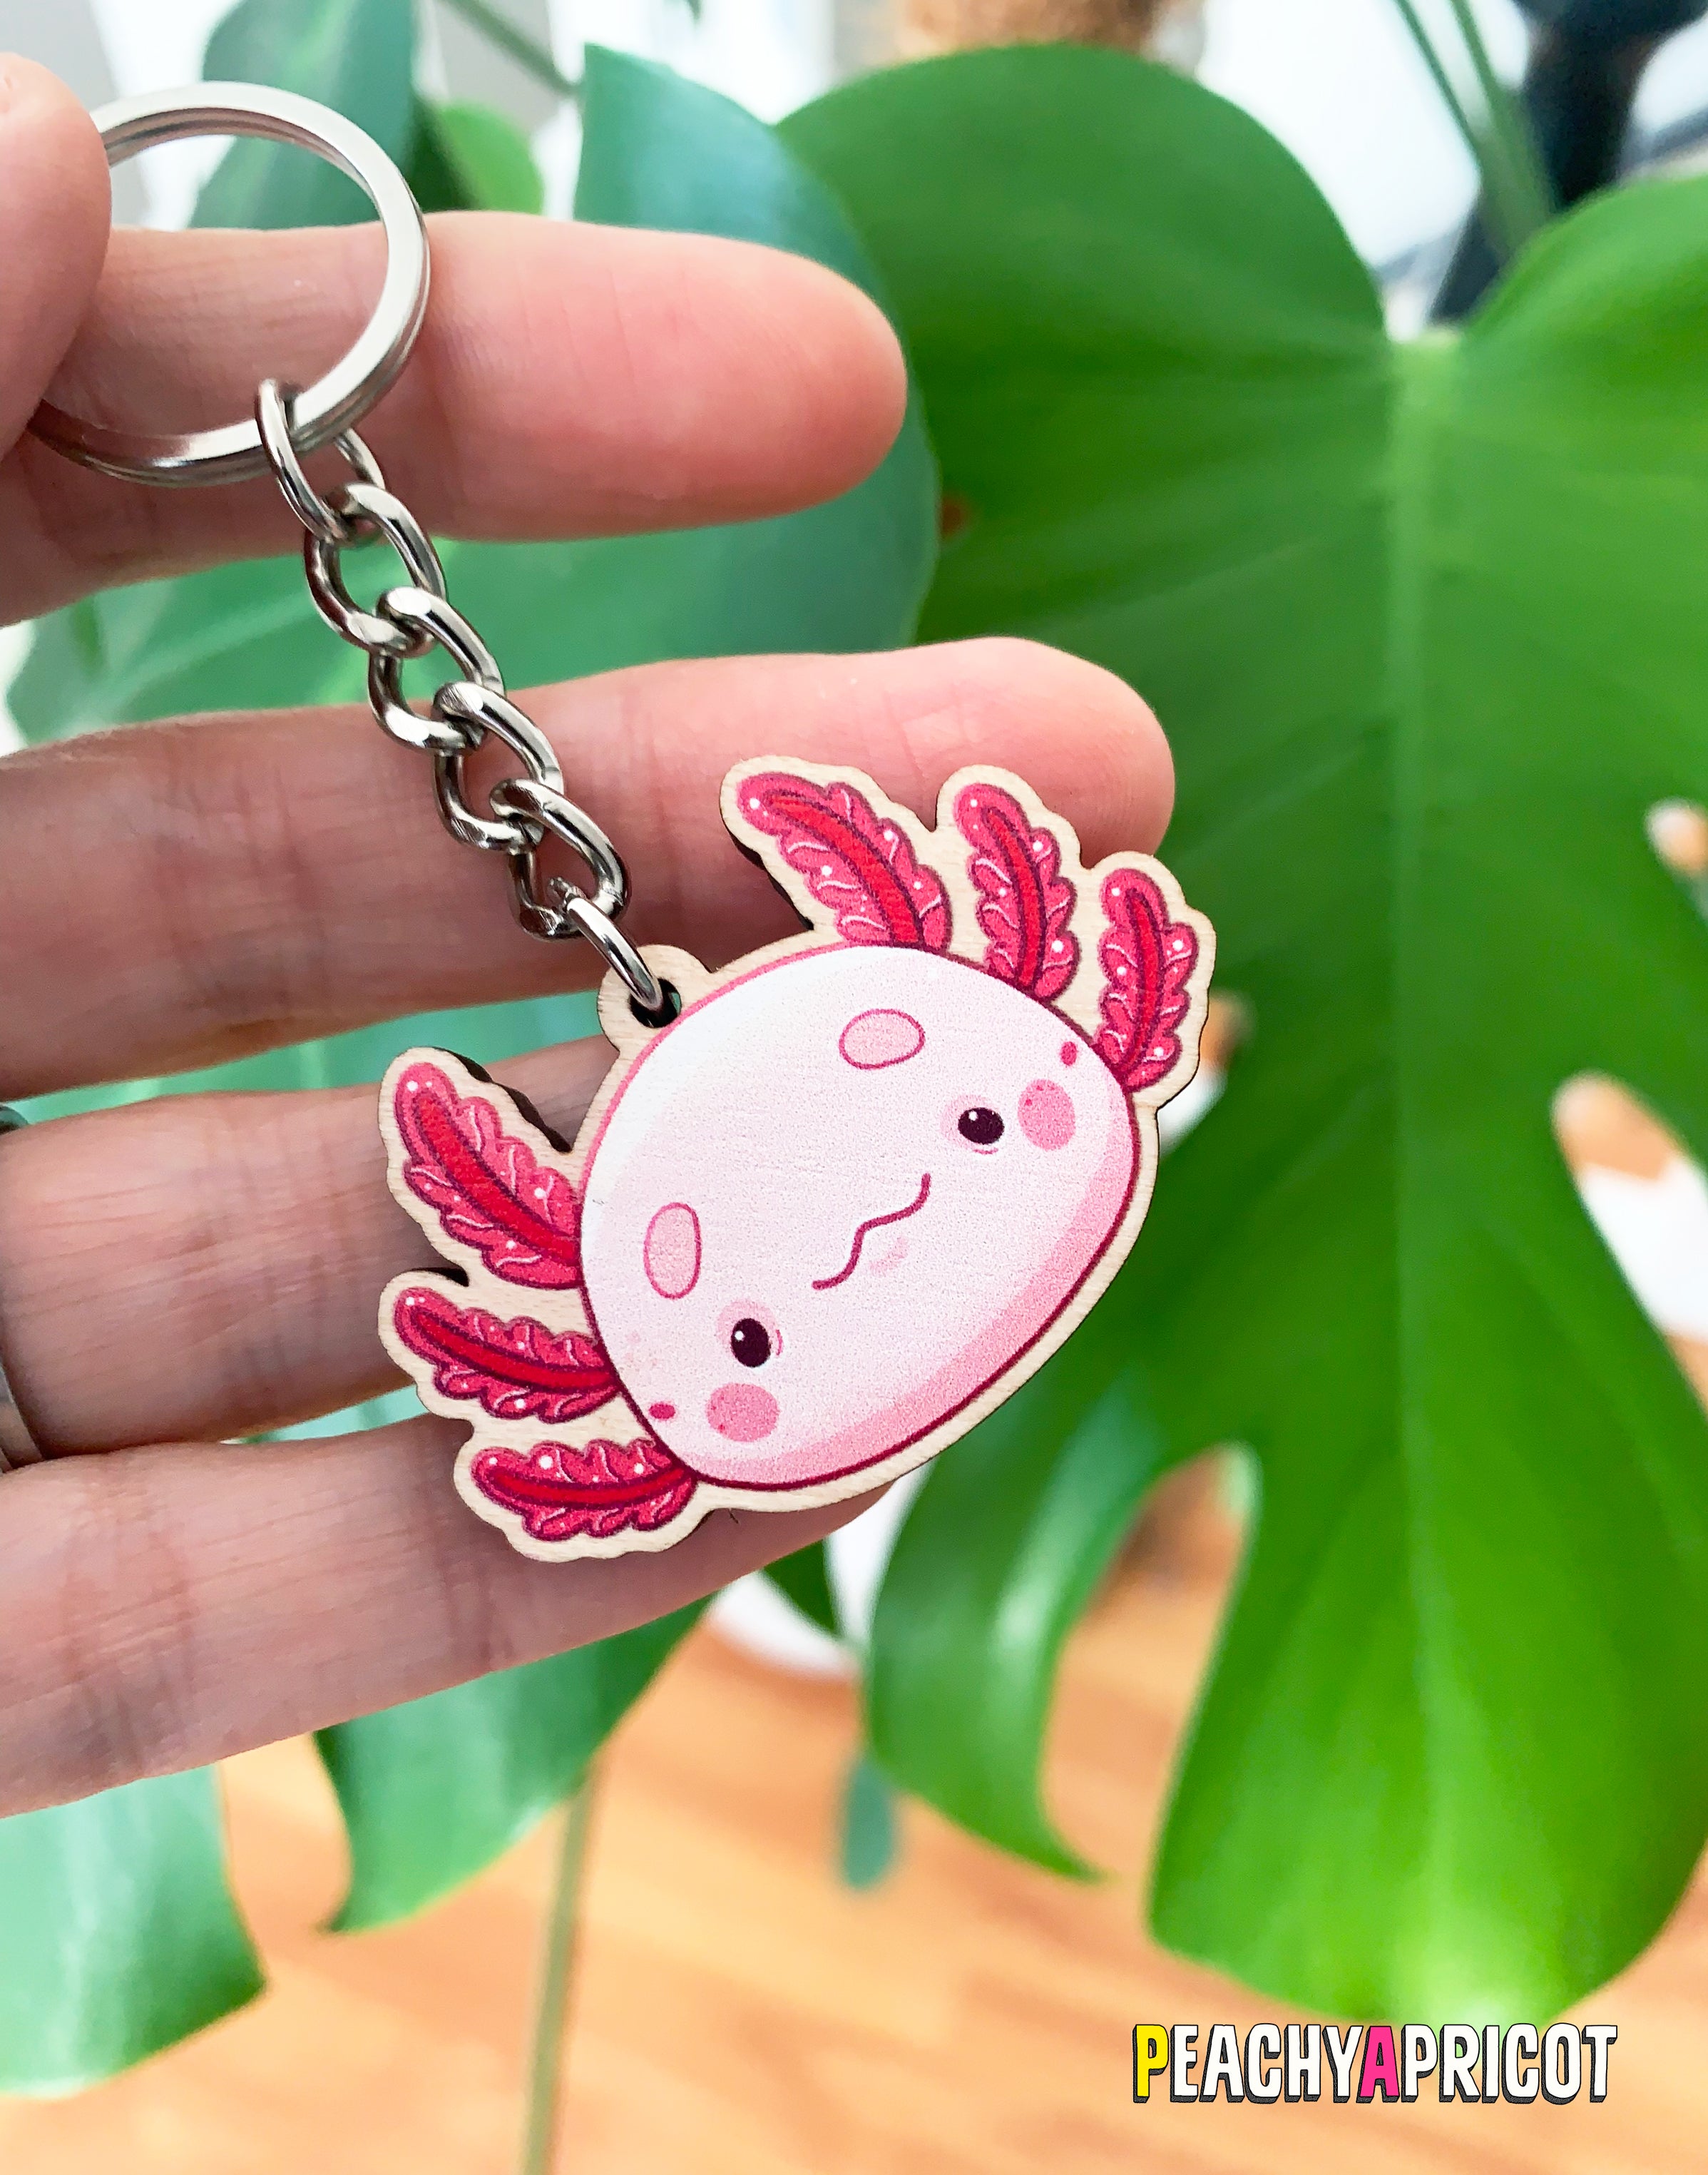 Cute axolotl Illustration printed on a wooden keychain